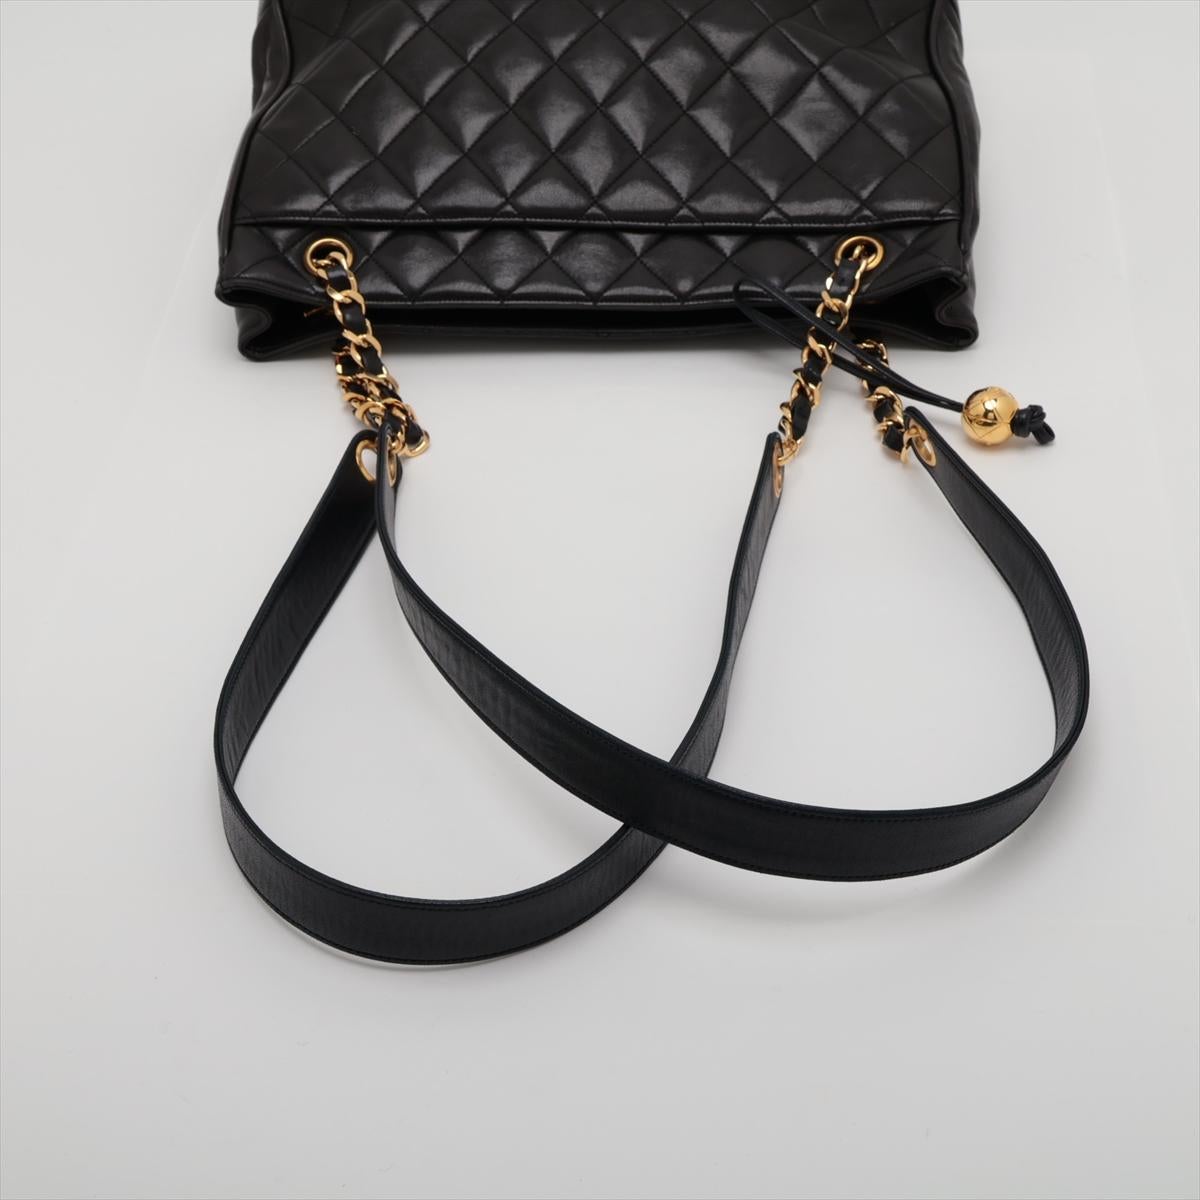 Chanel Matelasse Lambskin Chain Tote Bag Black 2